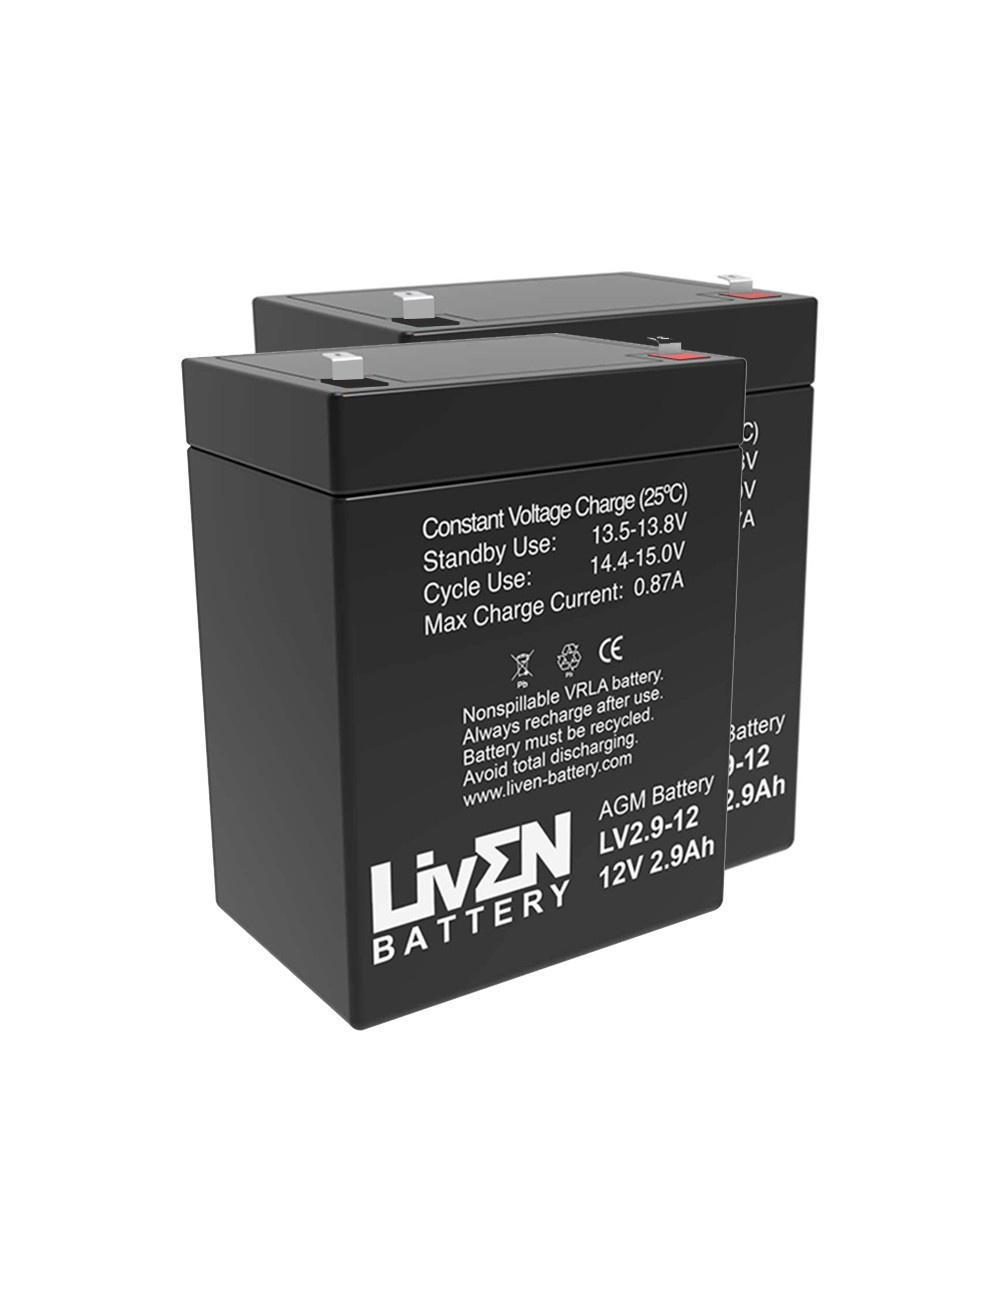 Pack 2 baterías (24V) para grúa Obea Vertic de 12V 2,9Ah C20 Liven LV2.9-12 - 2xLV2.9-12 -  -  - 1